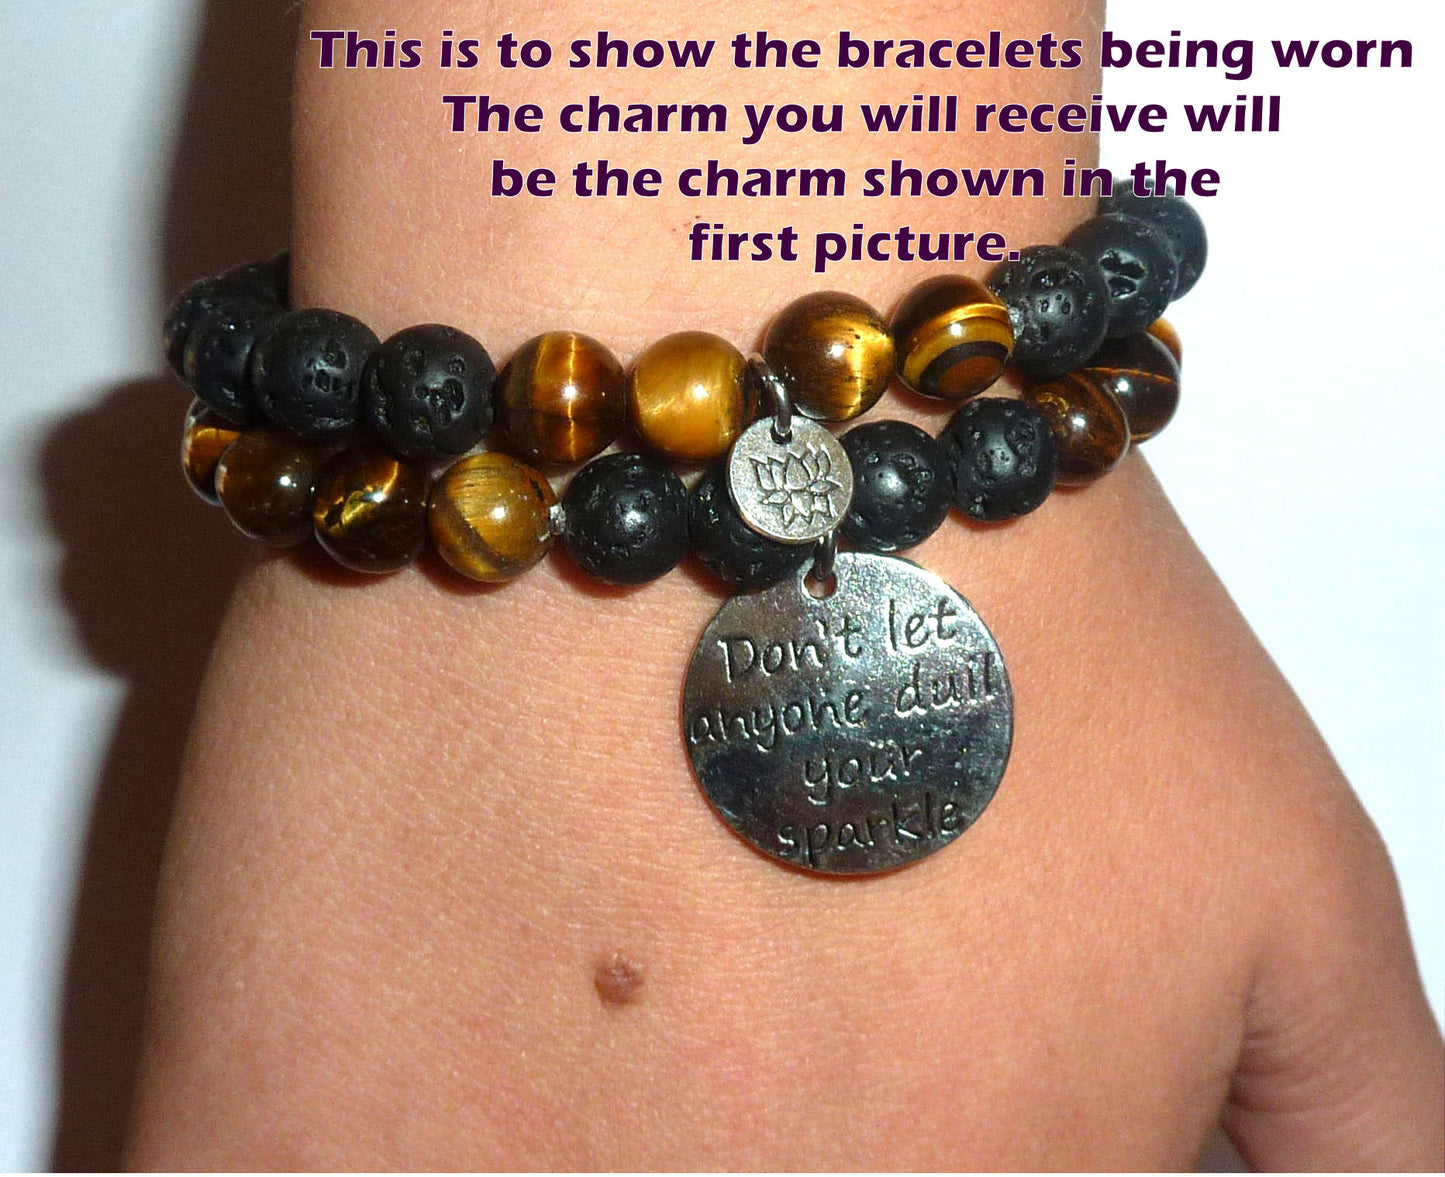 You are Braver, Stronger, Smarter - Women's Tiger Eye & Black Lava Diffuser Yoga Beads Charm Stretch Bracelet Gift Set